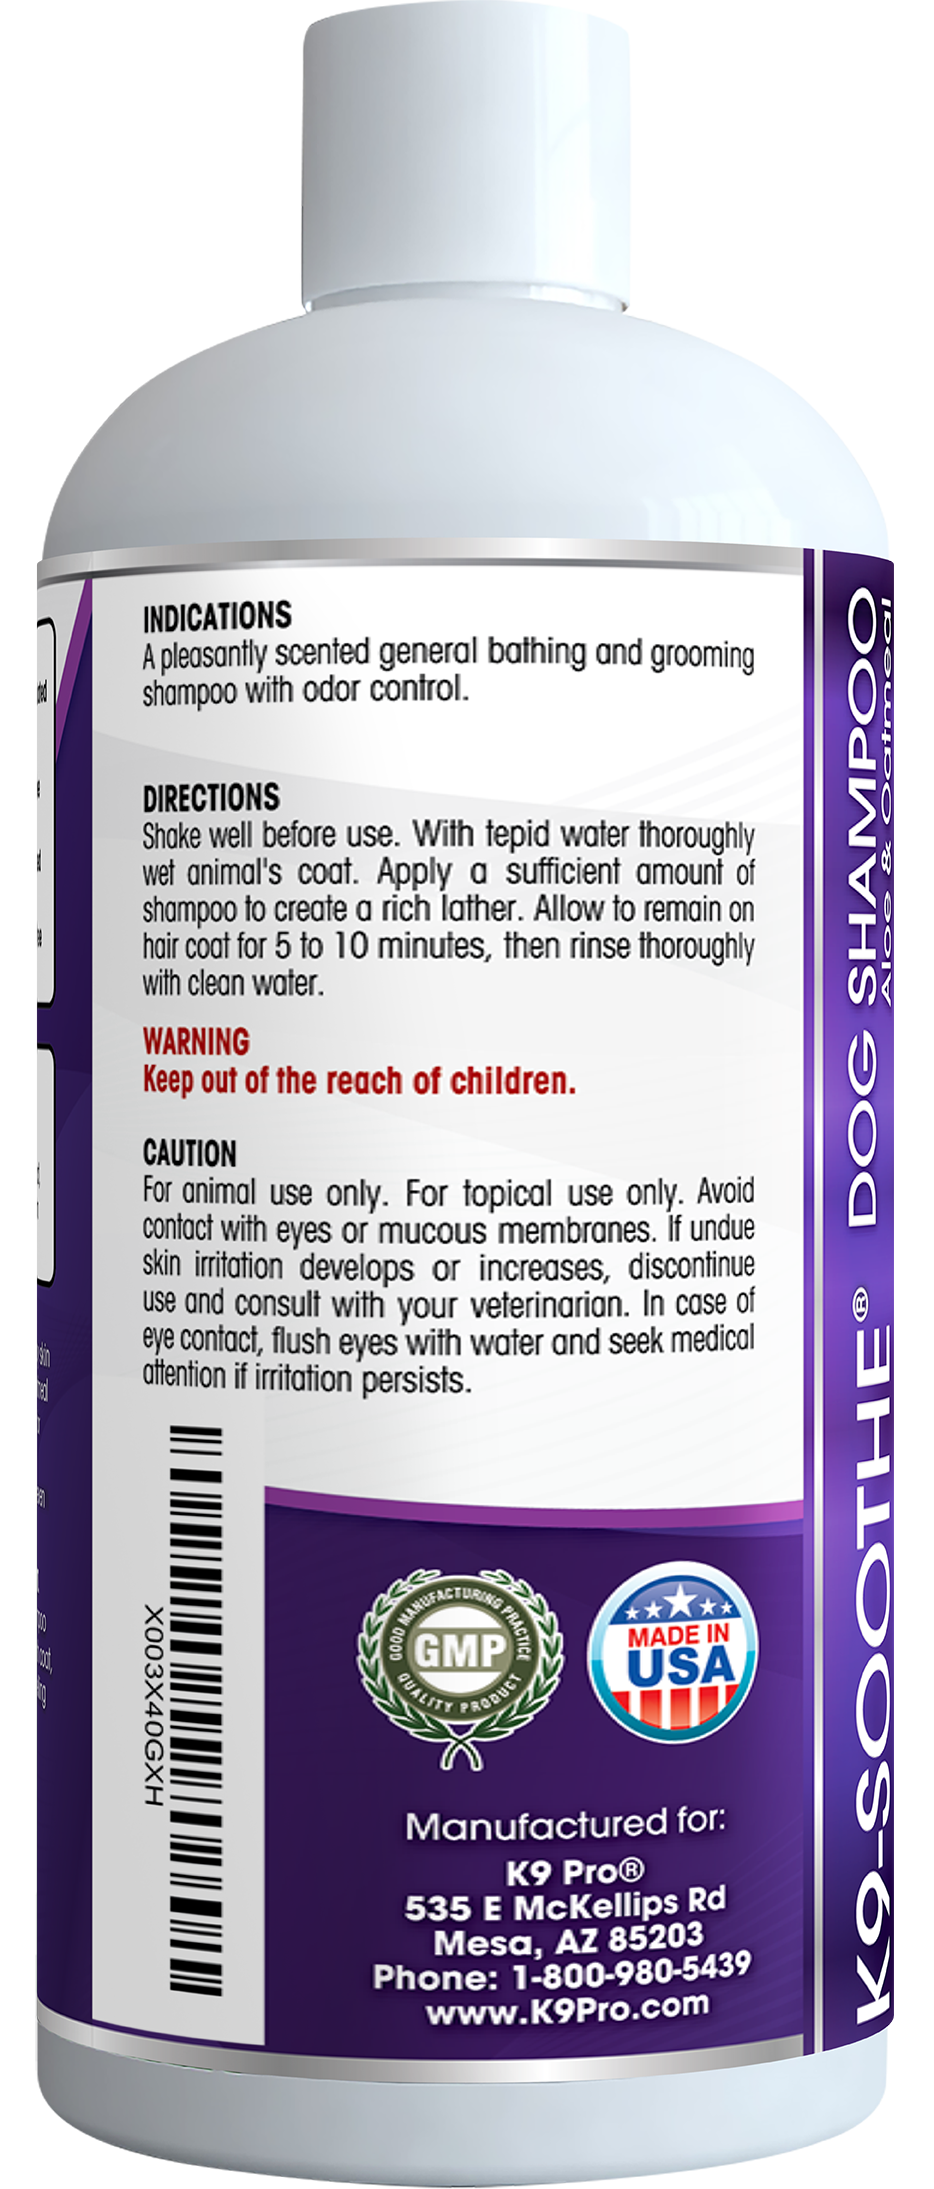 Lavender Mint Oatmeal & Aloe Dog Shampoo for Allergies - k9pro-store